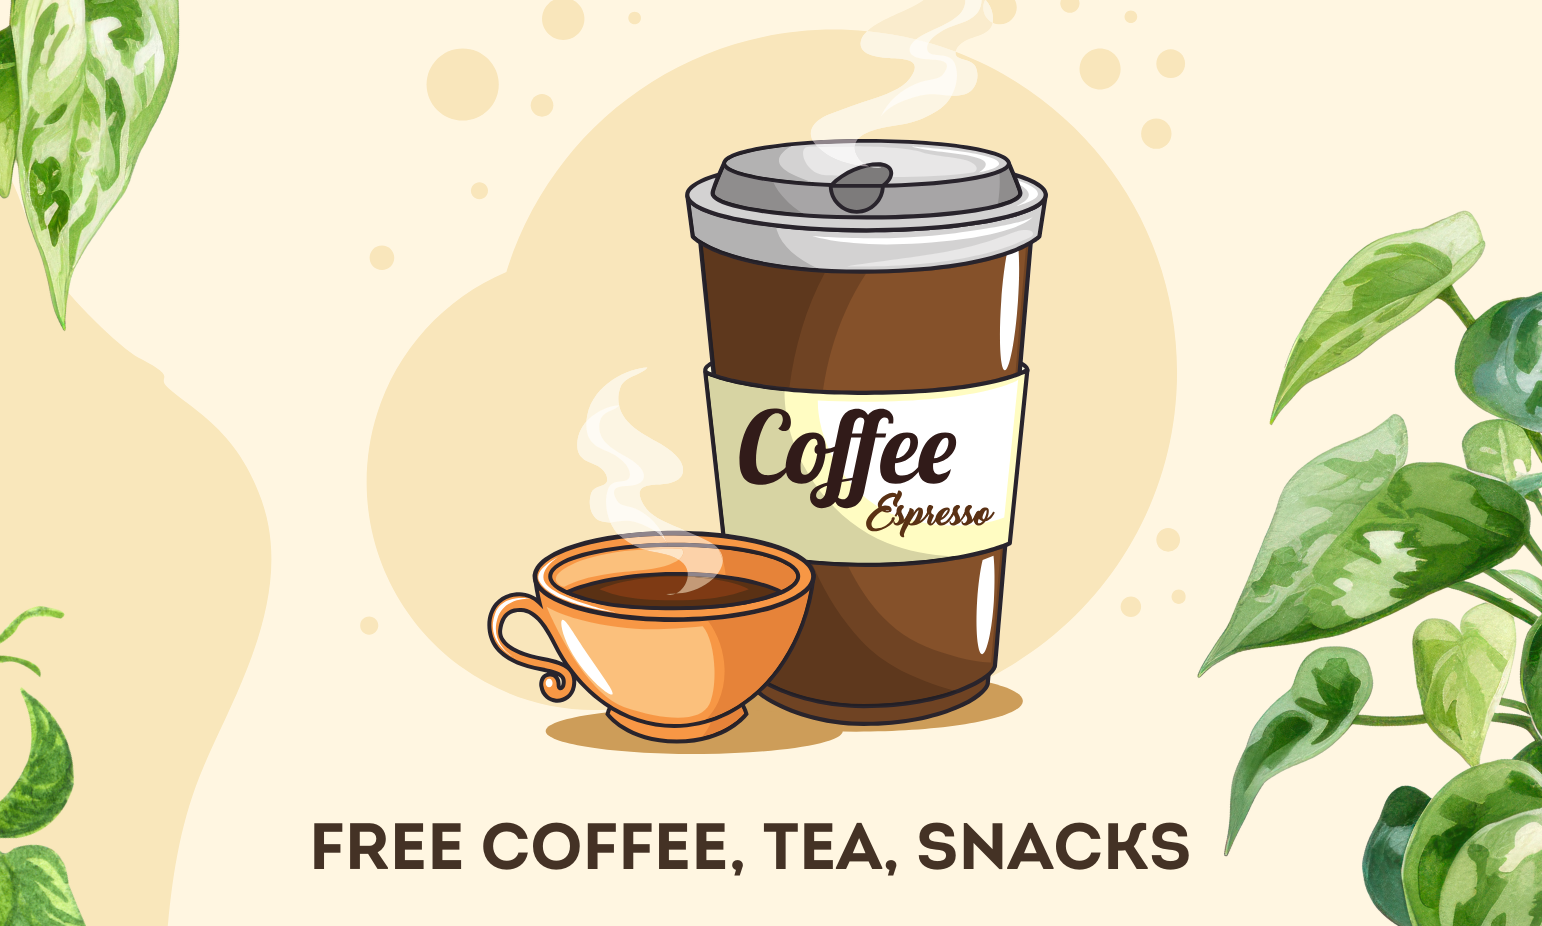 Coffee espresso, free coffee, tea, snacks, image of a hot coffee and plants